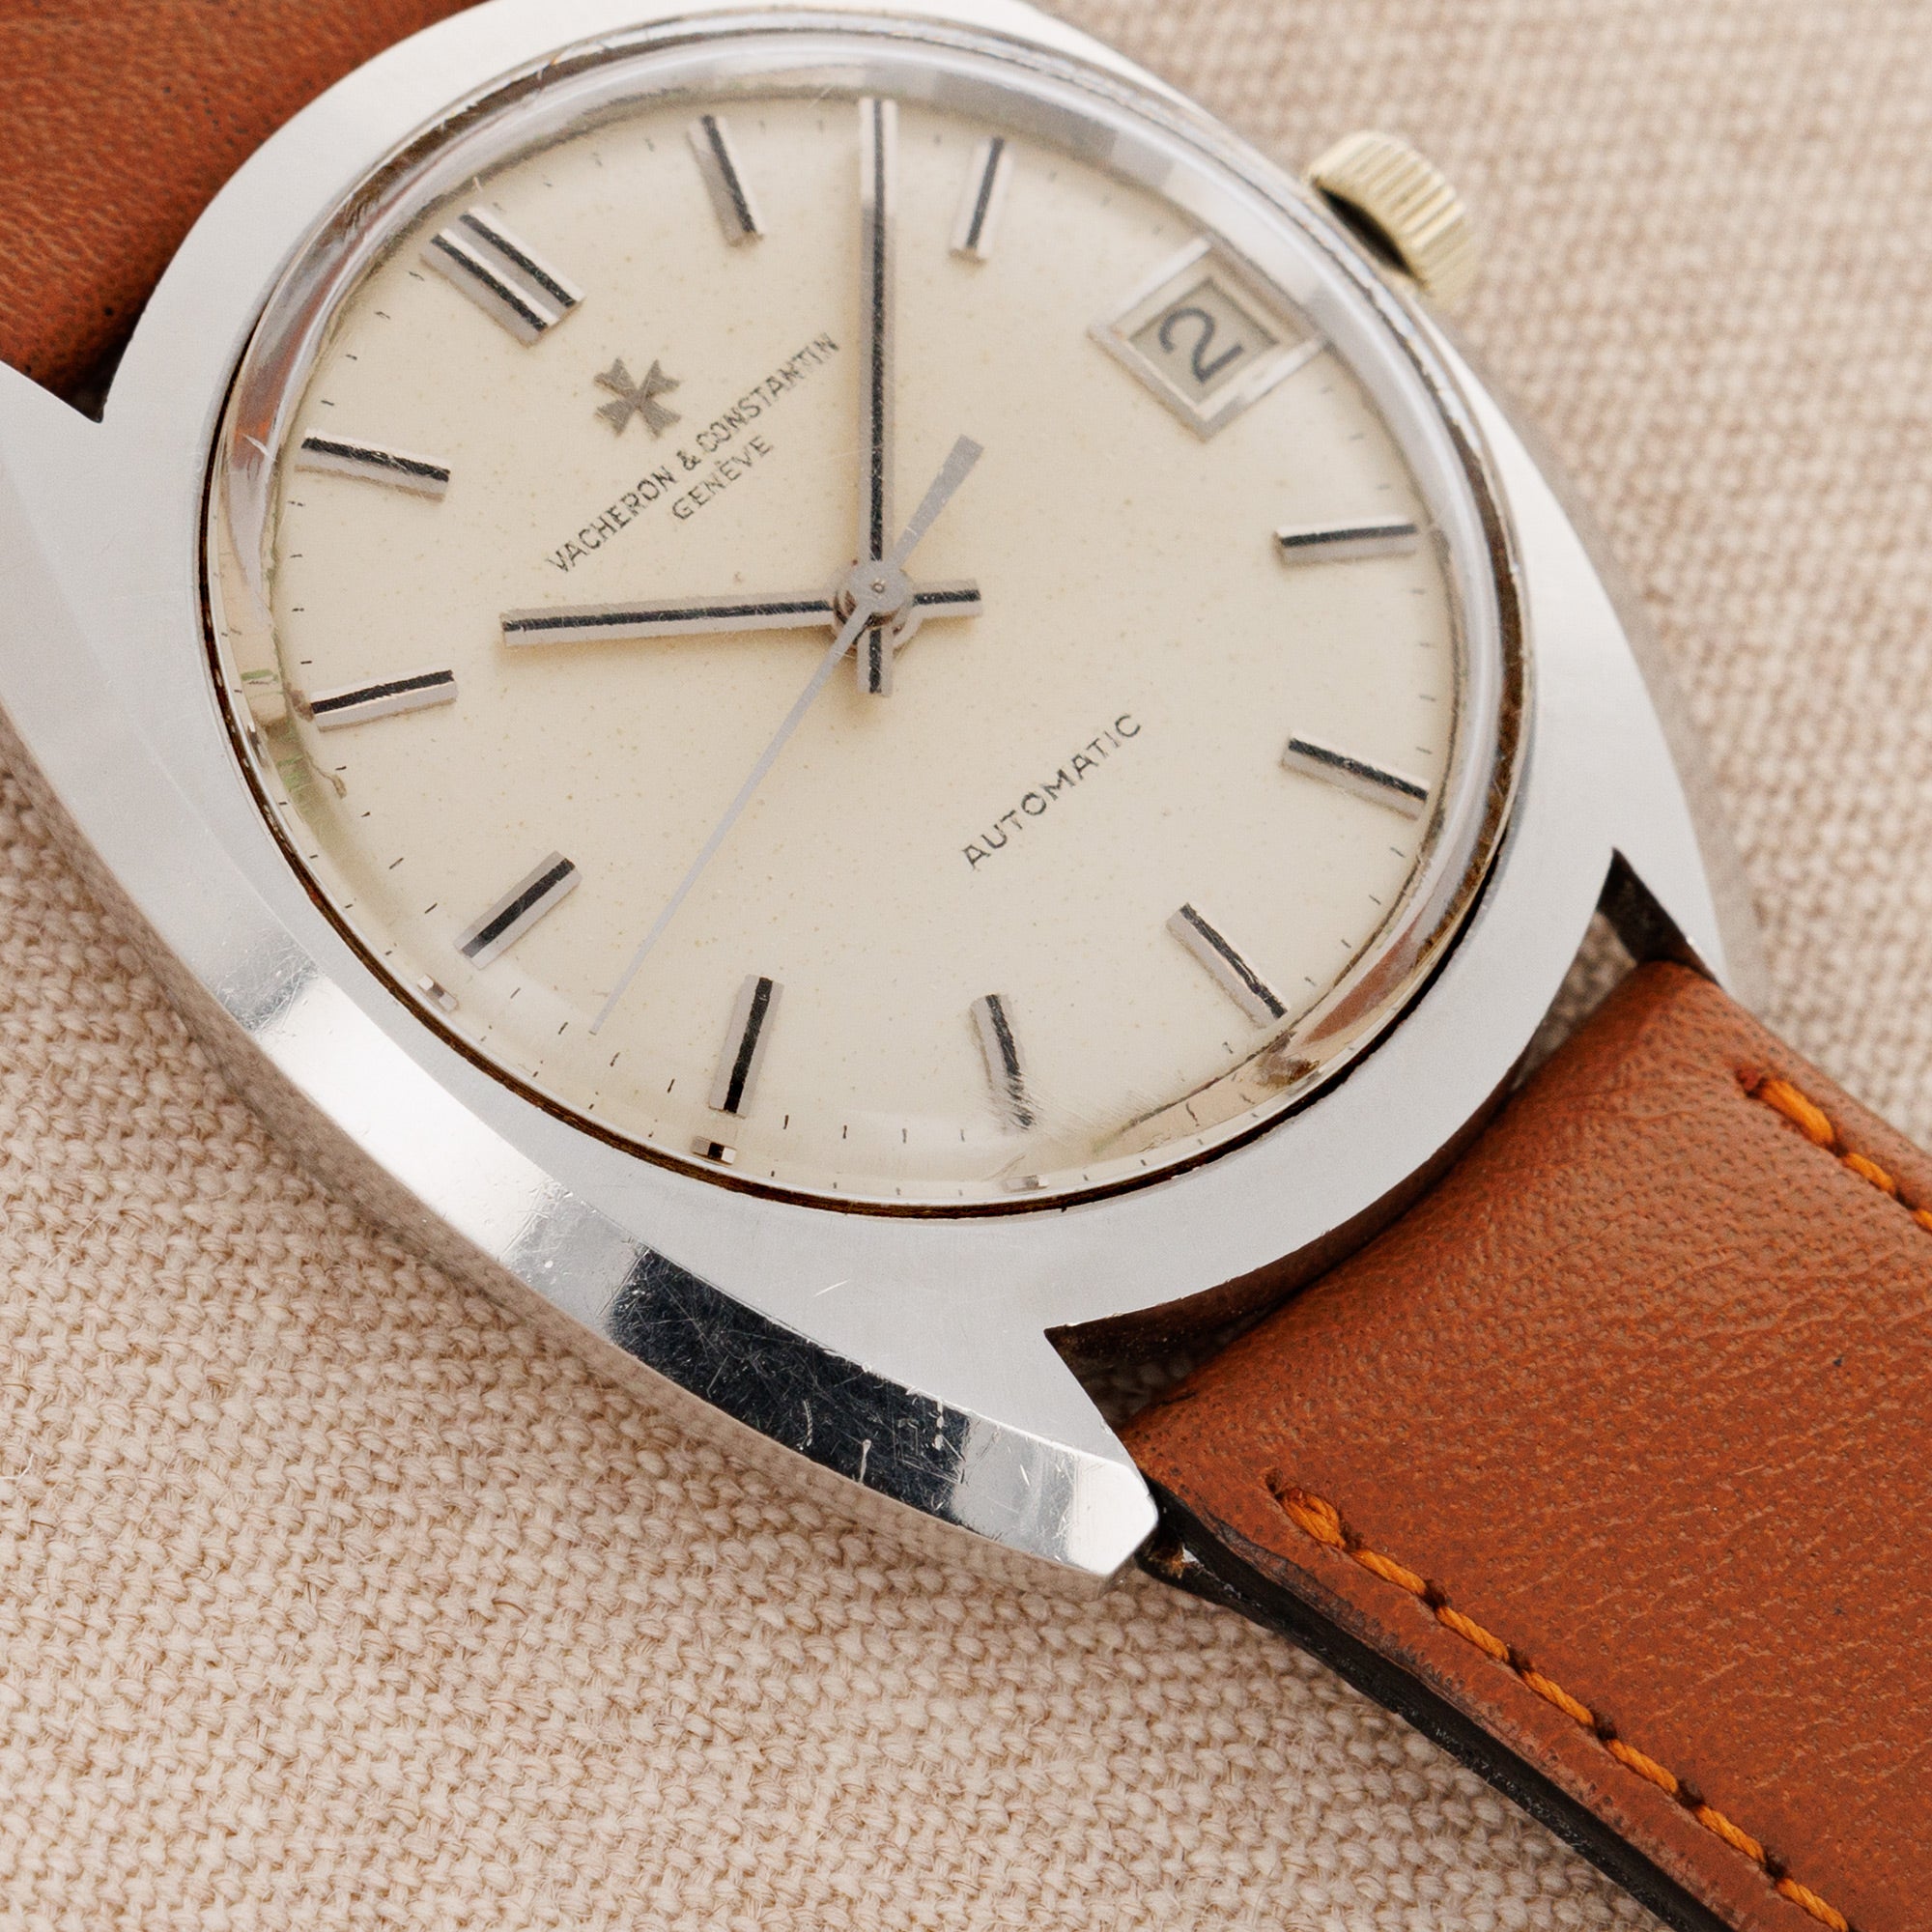 Vacheron Constantin - Vacheron Constantin Steel Watch Ref. 7397 - The Keystone Watches